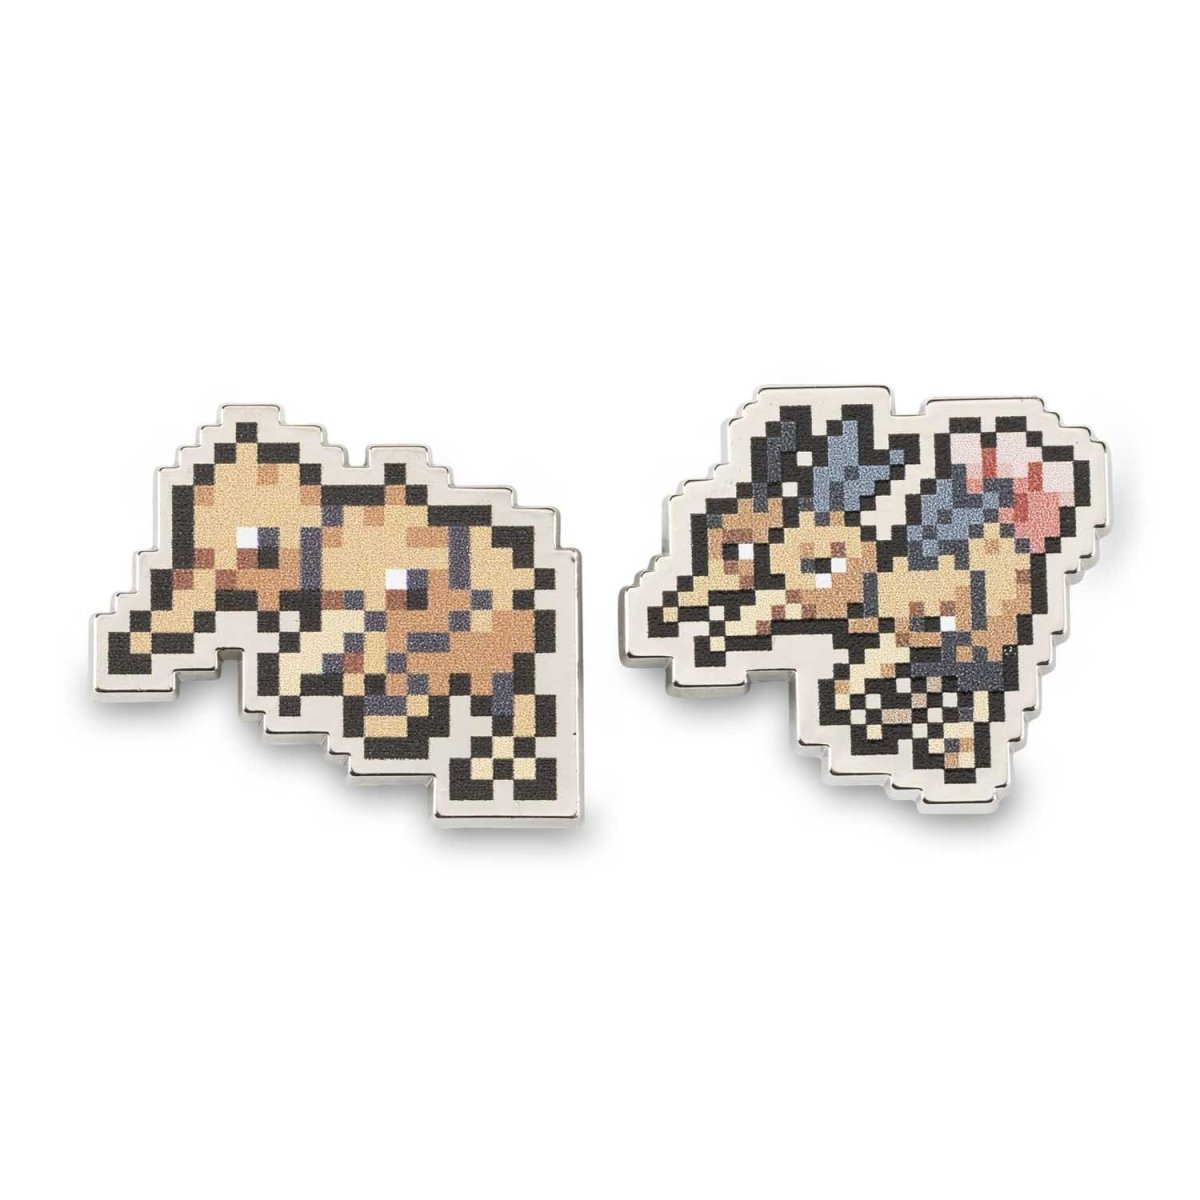 Voltorb & Electrode Pokémon Pixel Pins (2-Pack)